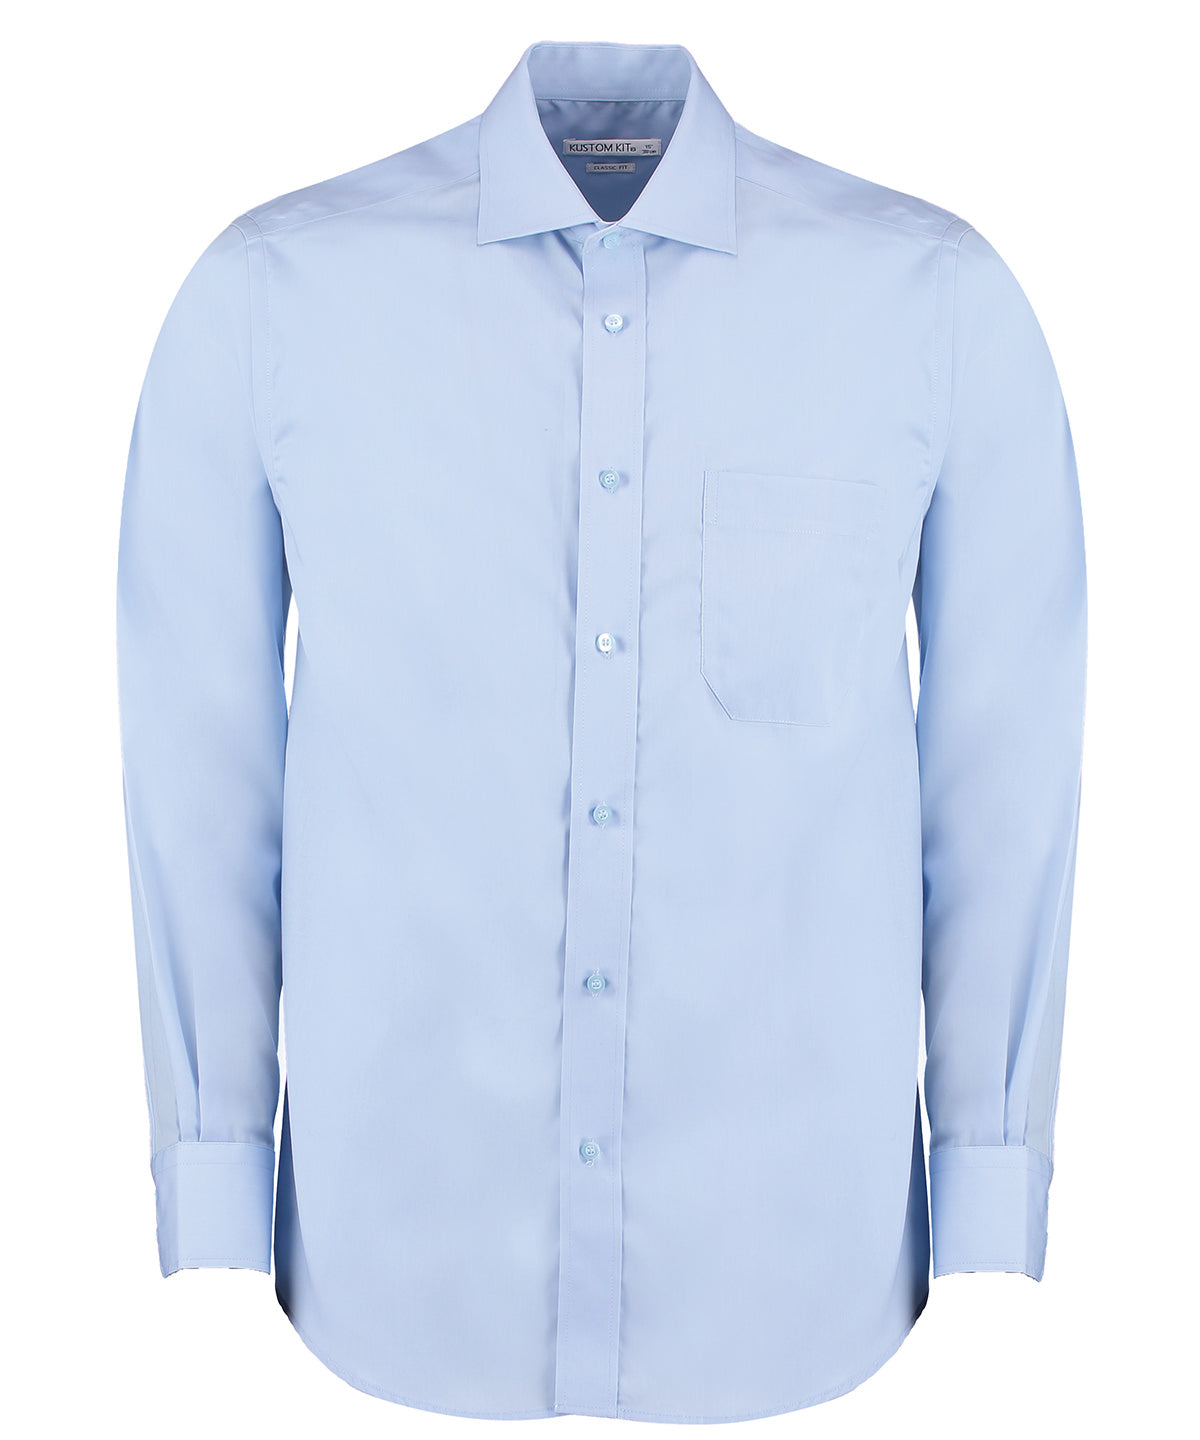 Bolir - Premium Non-iron Corporate Shirt Long-sleeved (classic Fit)